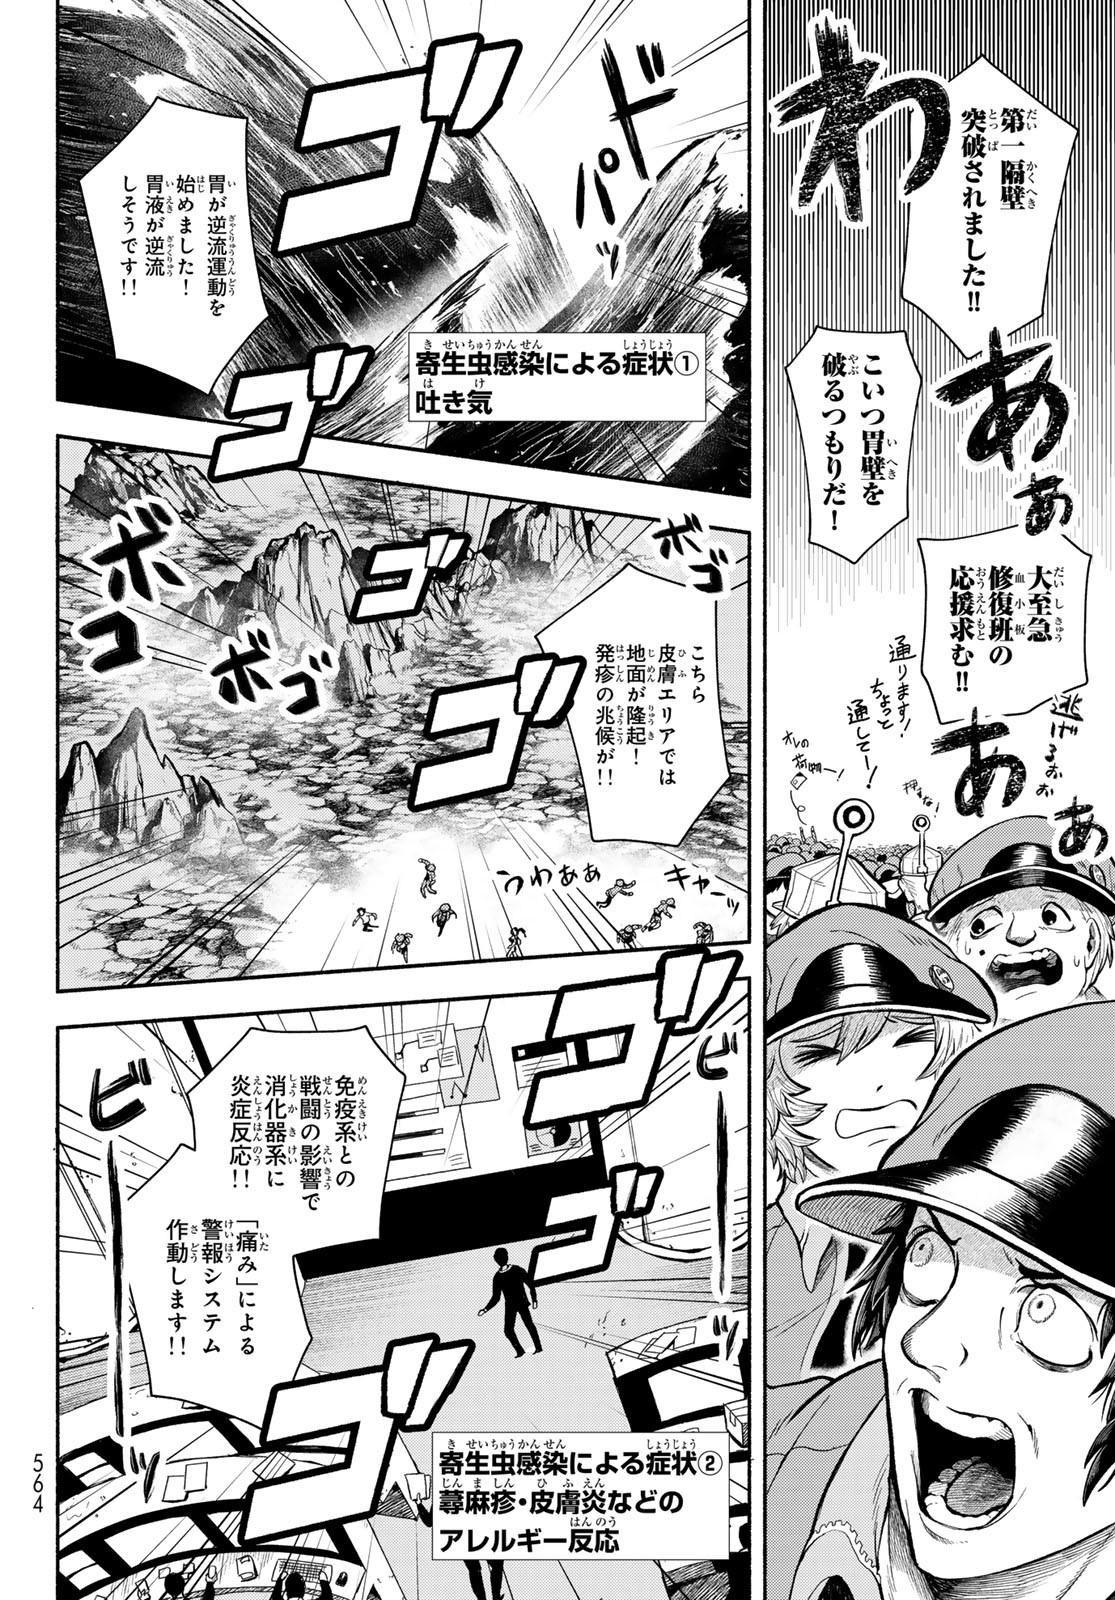 Hataraku Saibou Okusuri - Chapter 6 - Page 14